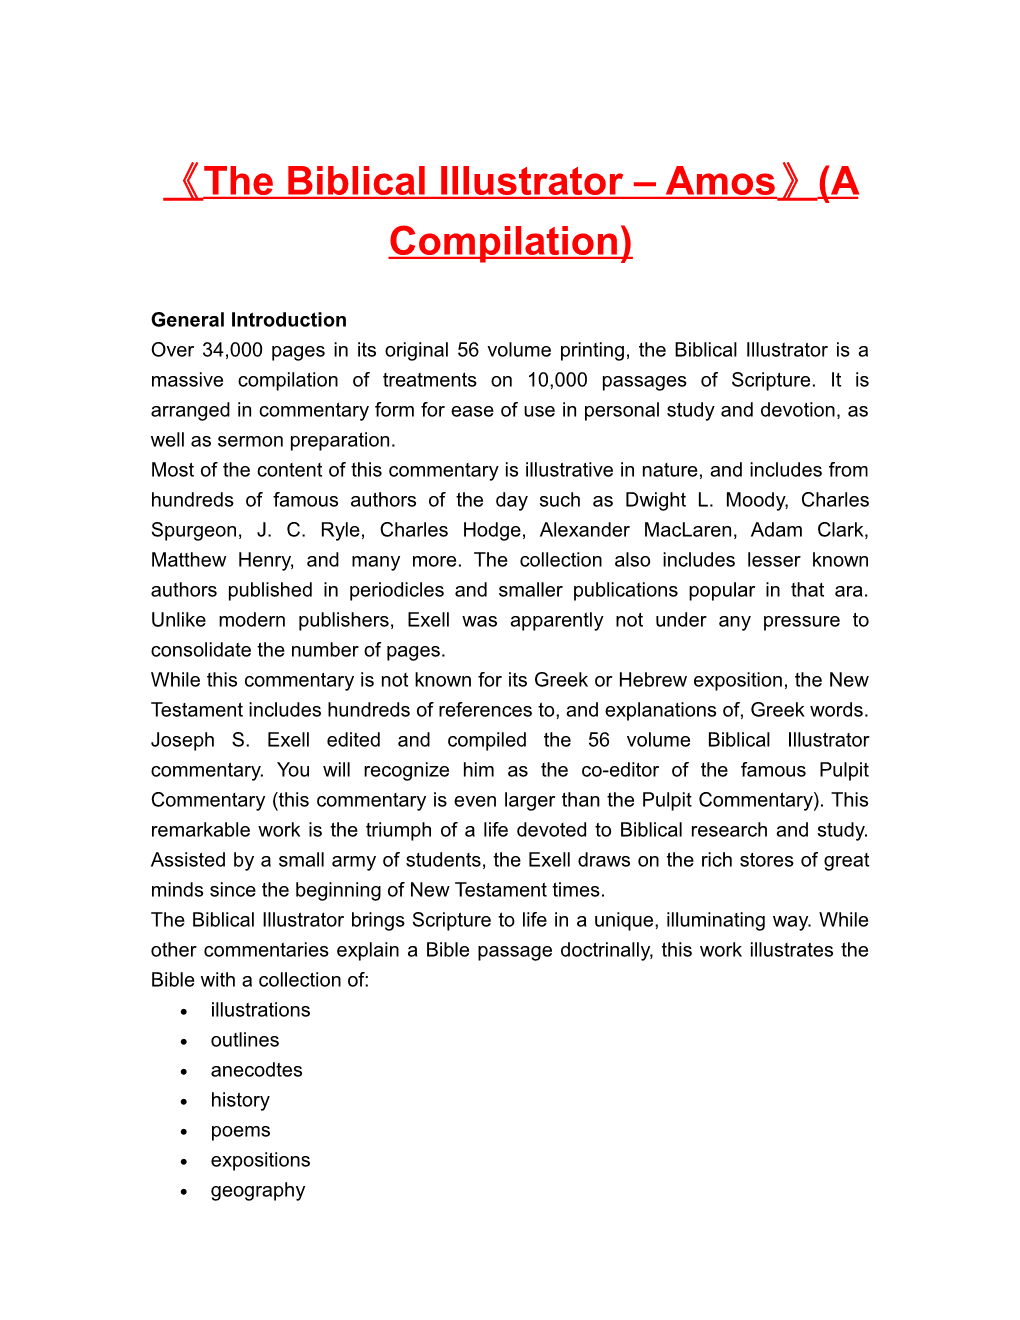 The Biblical Illustrator Amos (A Compilation)